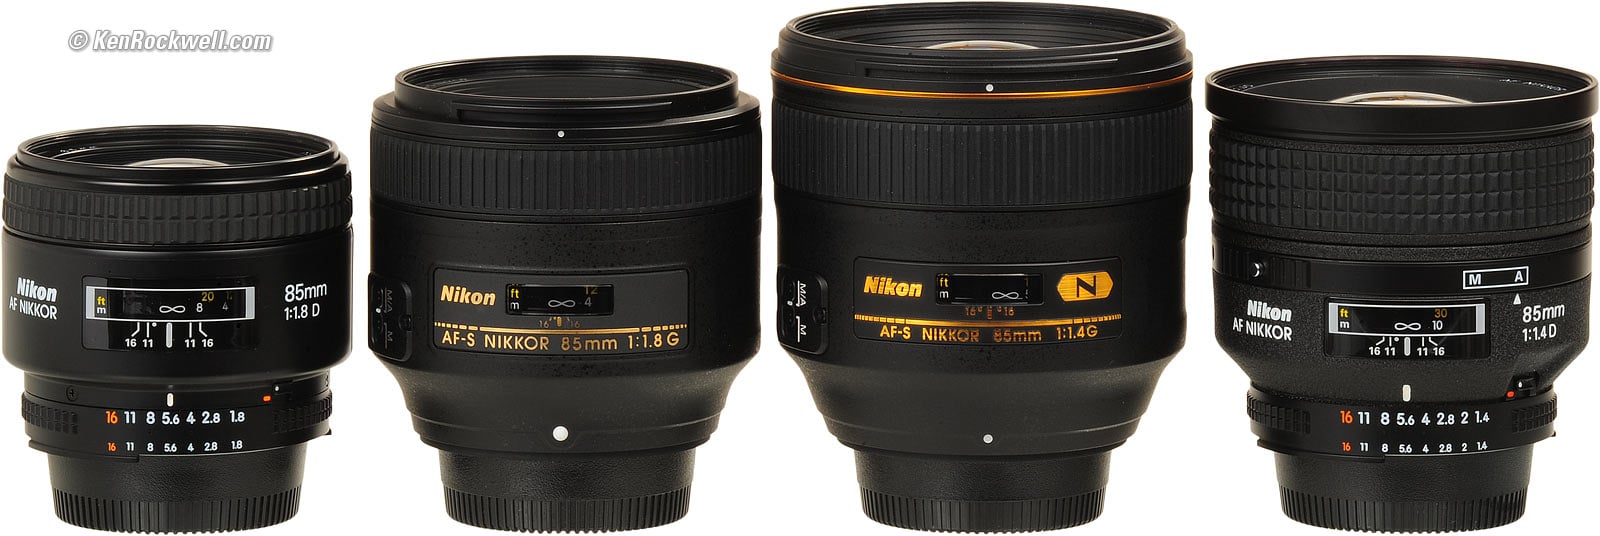 Nikon 85mm Comparison